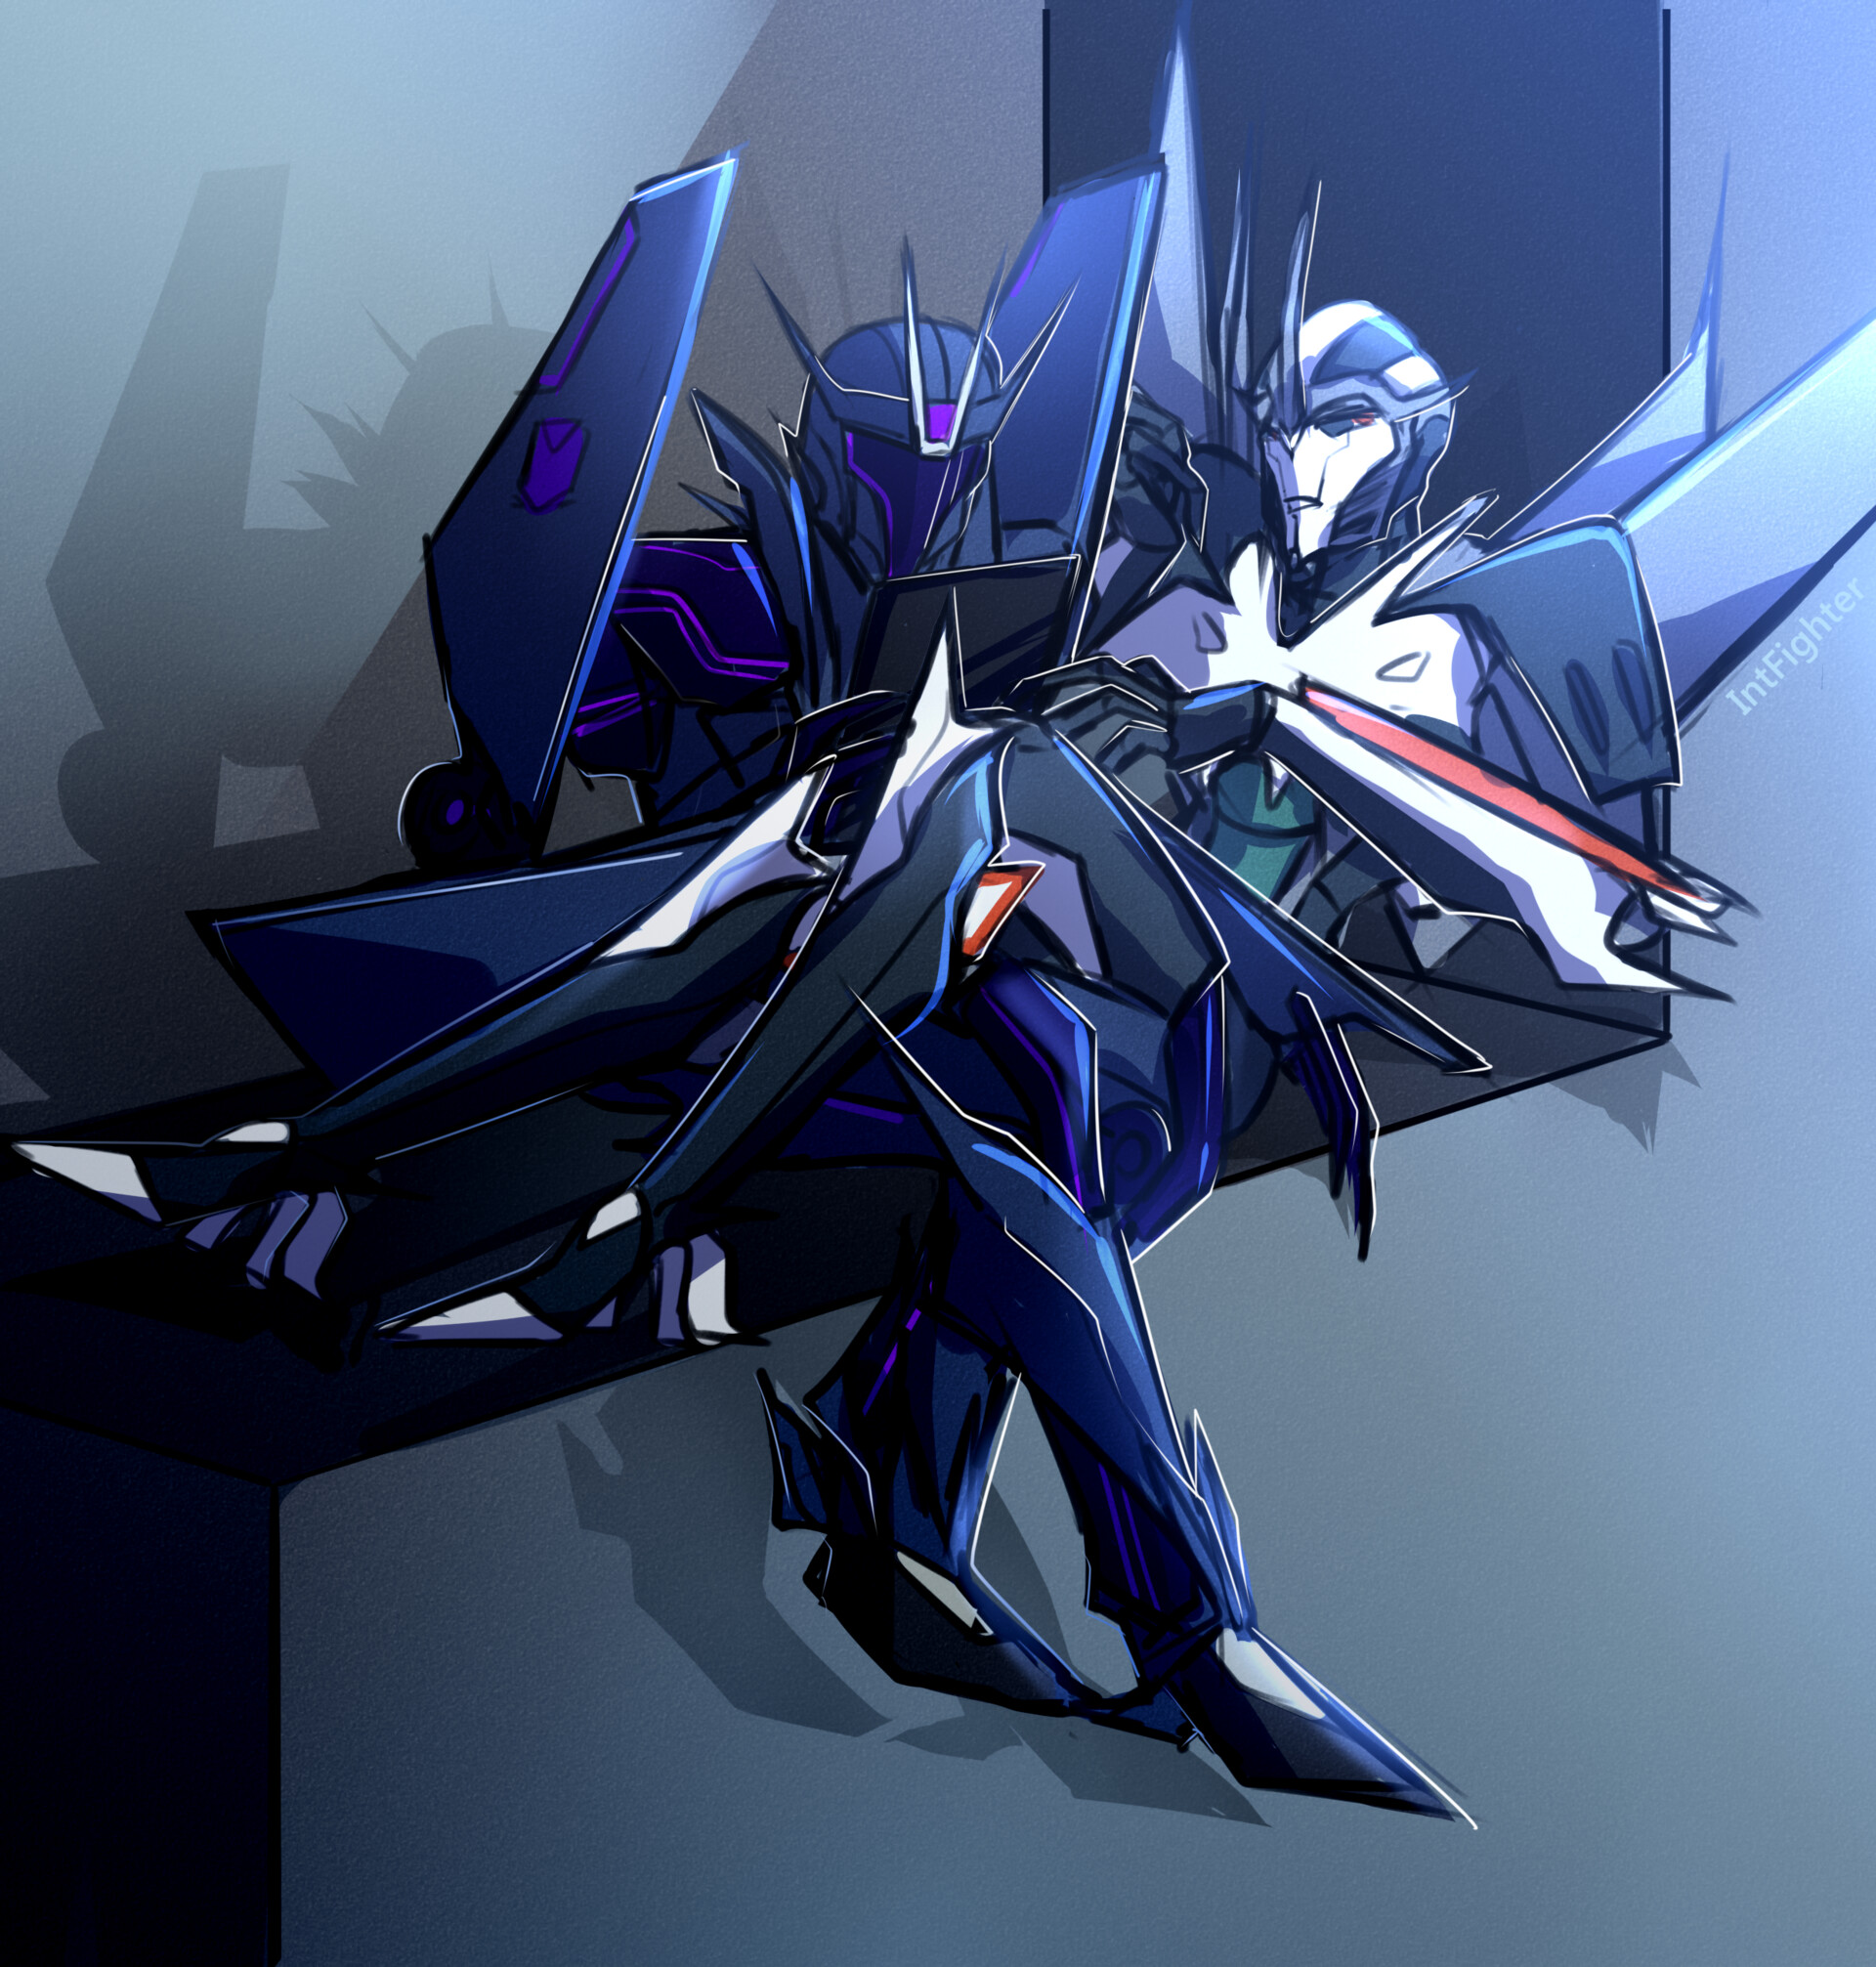 Fan-artwork for the "Transformers: Prime"